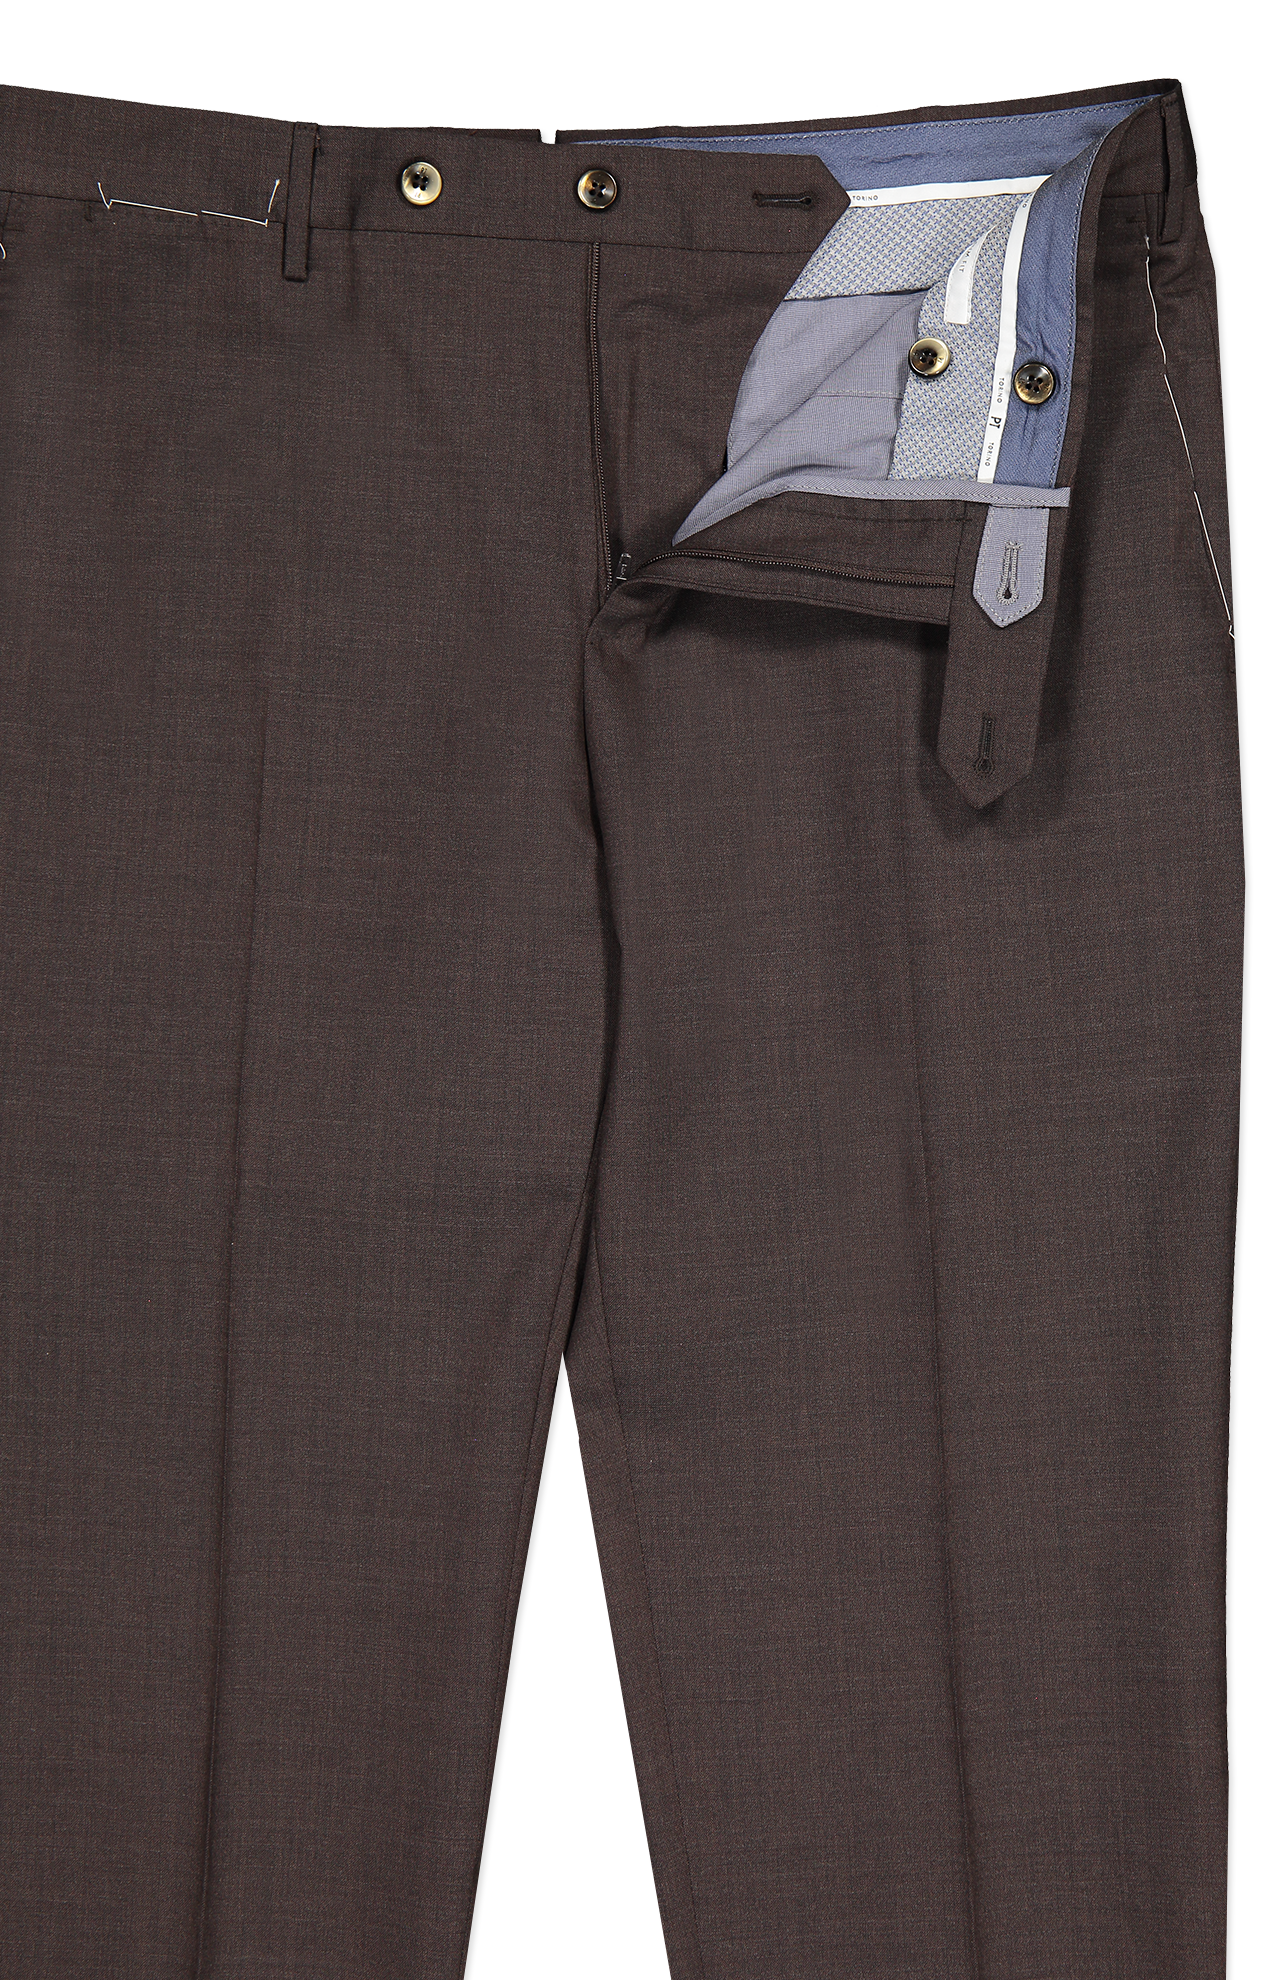 PT Torino Wool Plain Weave Trouser in Brown Melange Front Fly Detail Image (7062204448883)